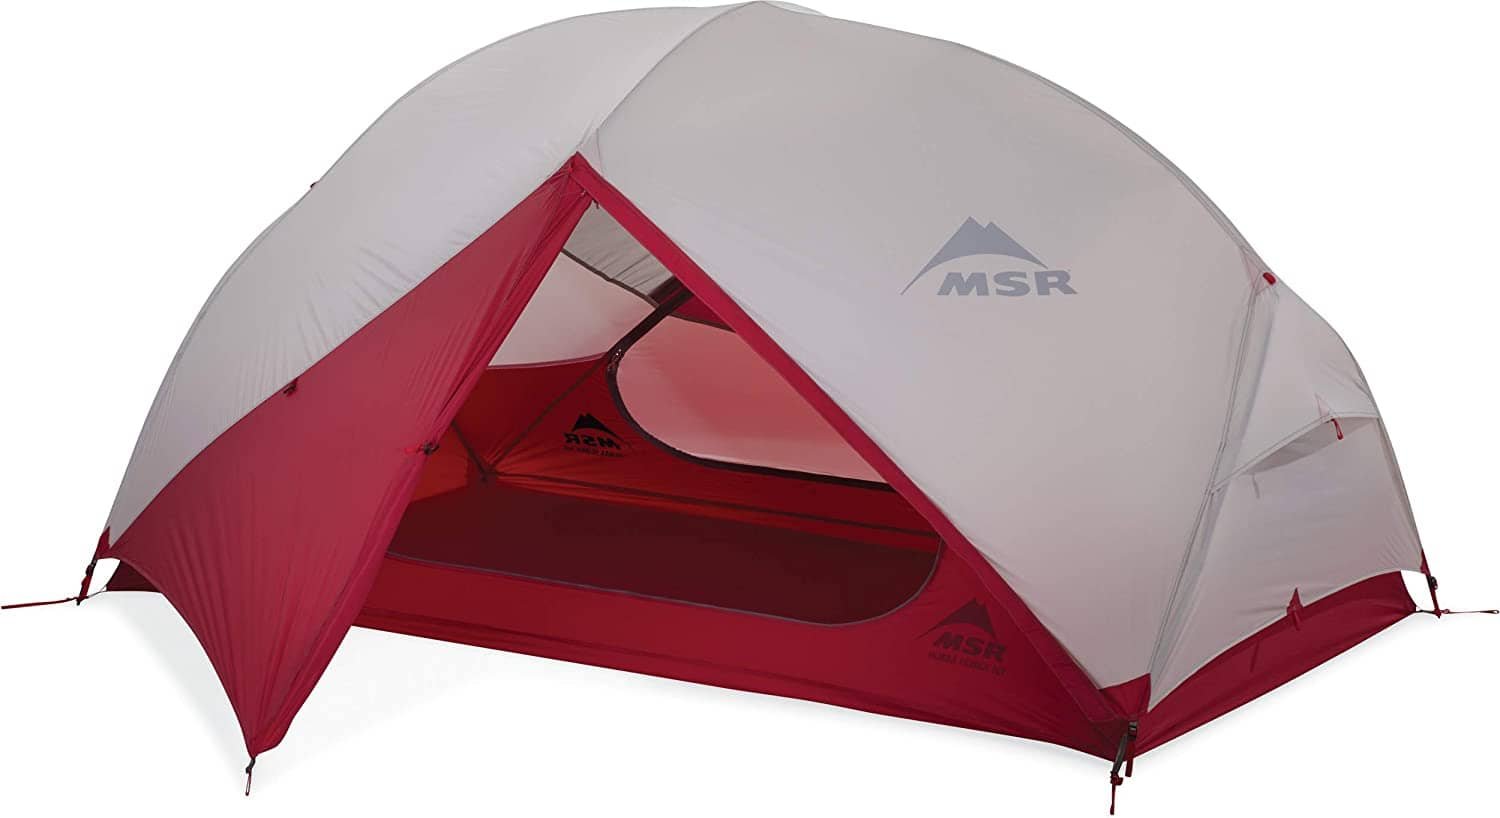 MSR Hubba Hubba NX Tent Review